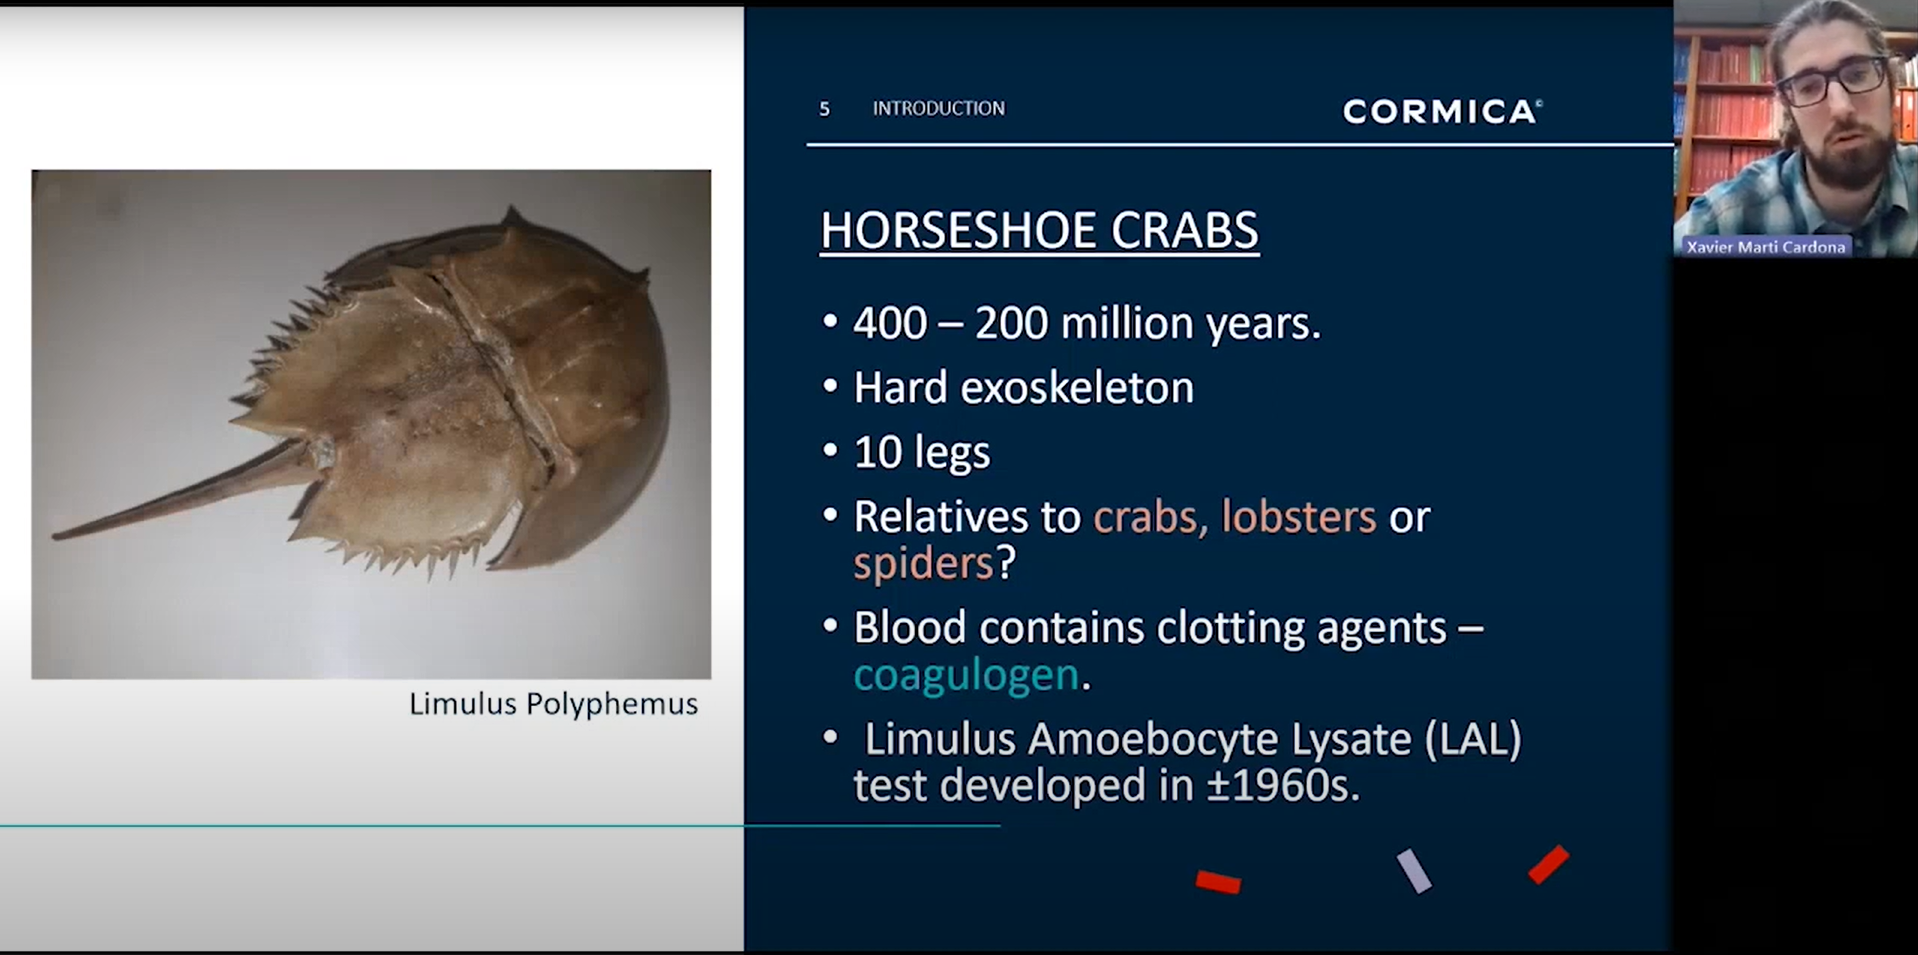 How do Horseshoe Crabs Help Detect Endotoxins?